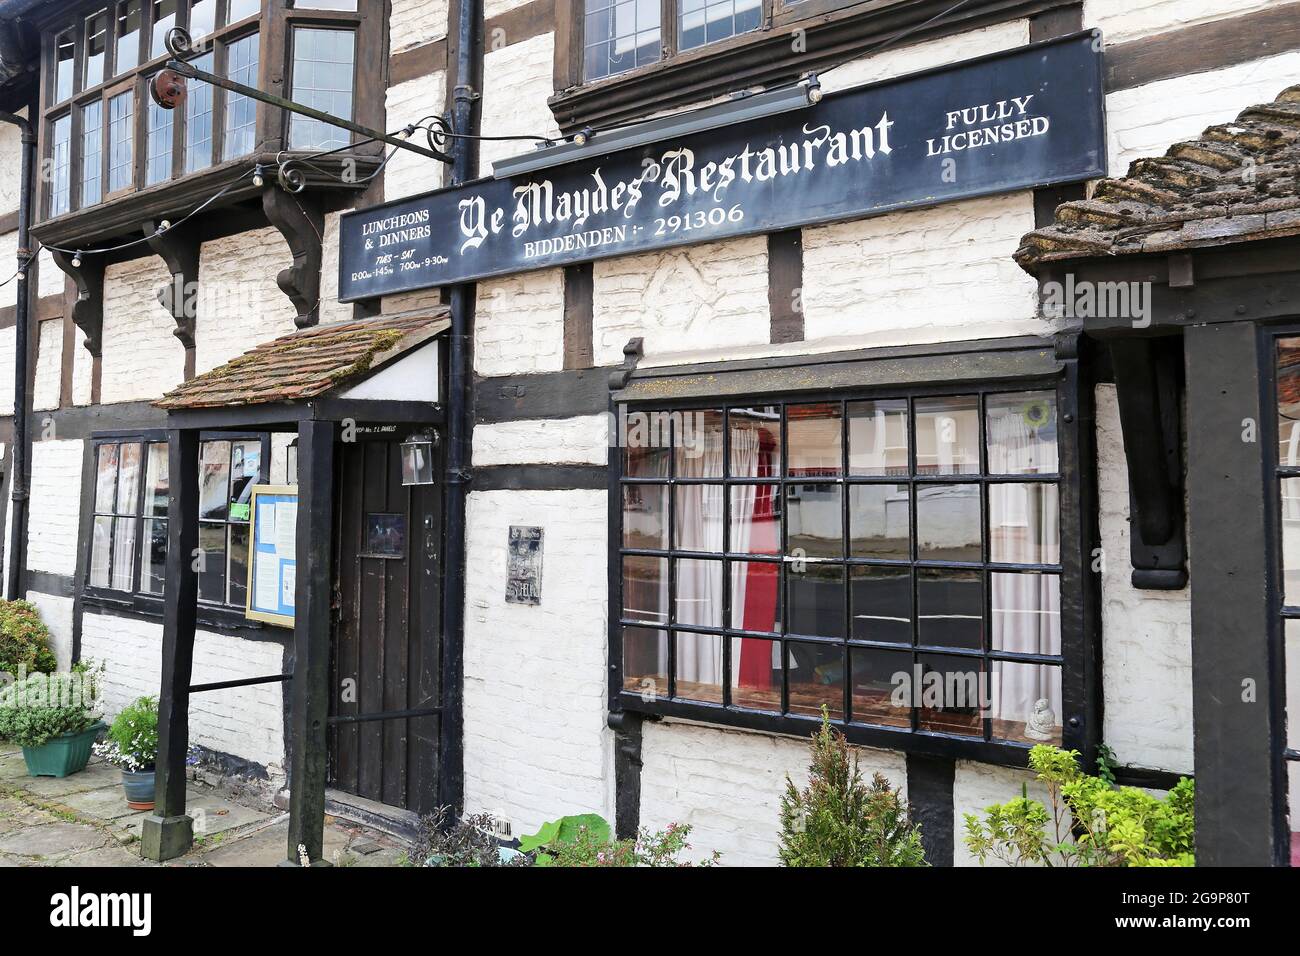 Ye Maydes Restaurant, High Street, Biddenden, Kent, England, Great Britain, United Kingdom, Europe Stock Photo